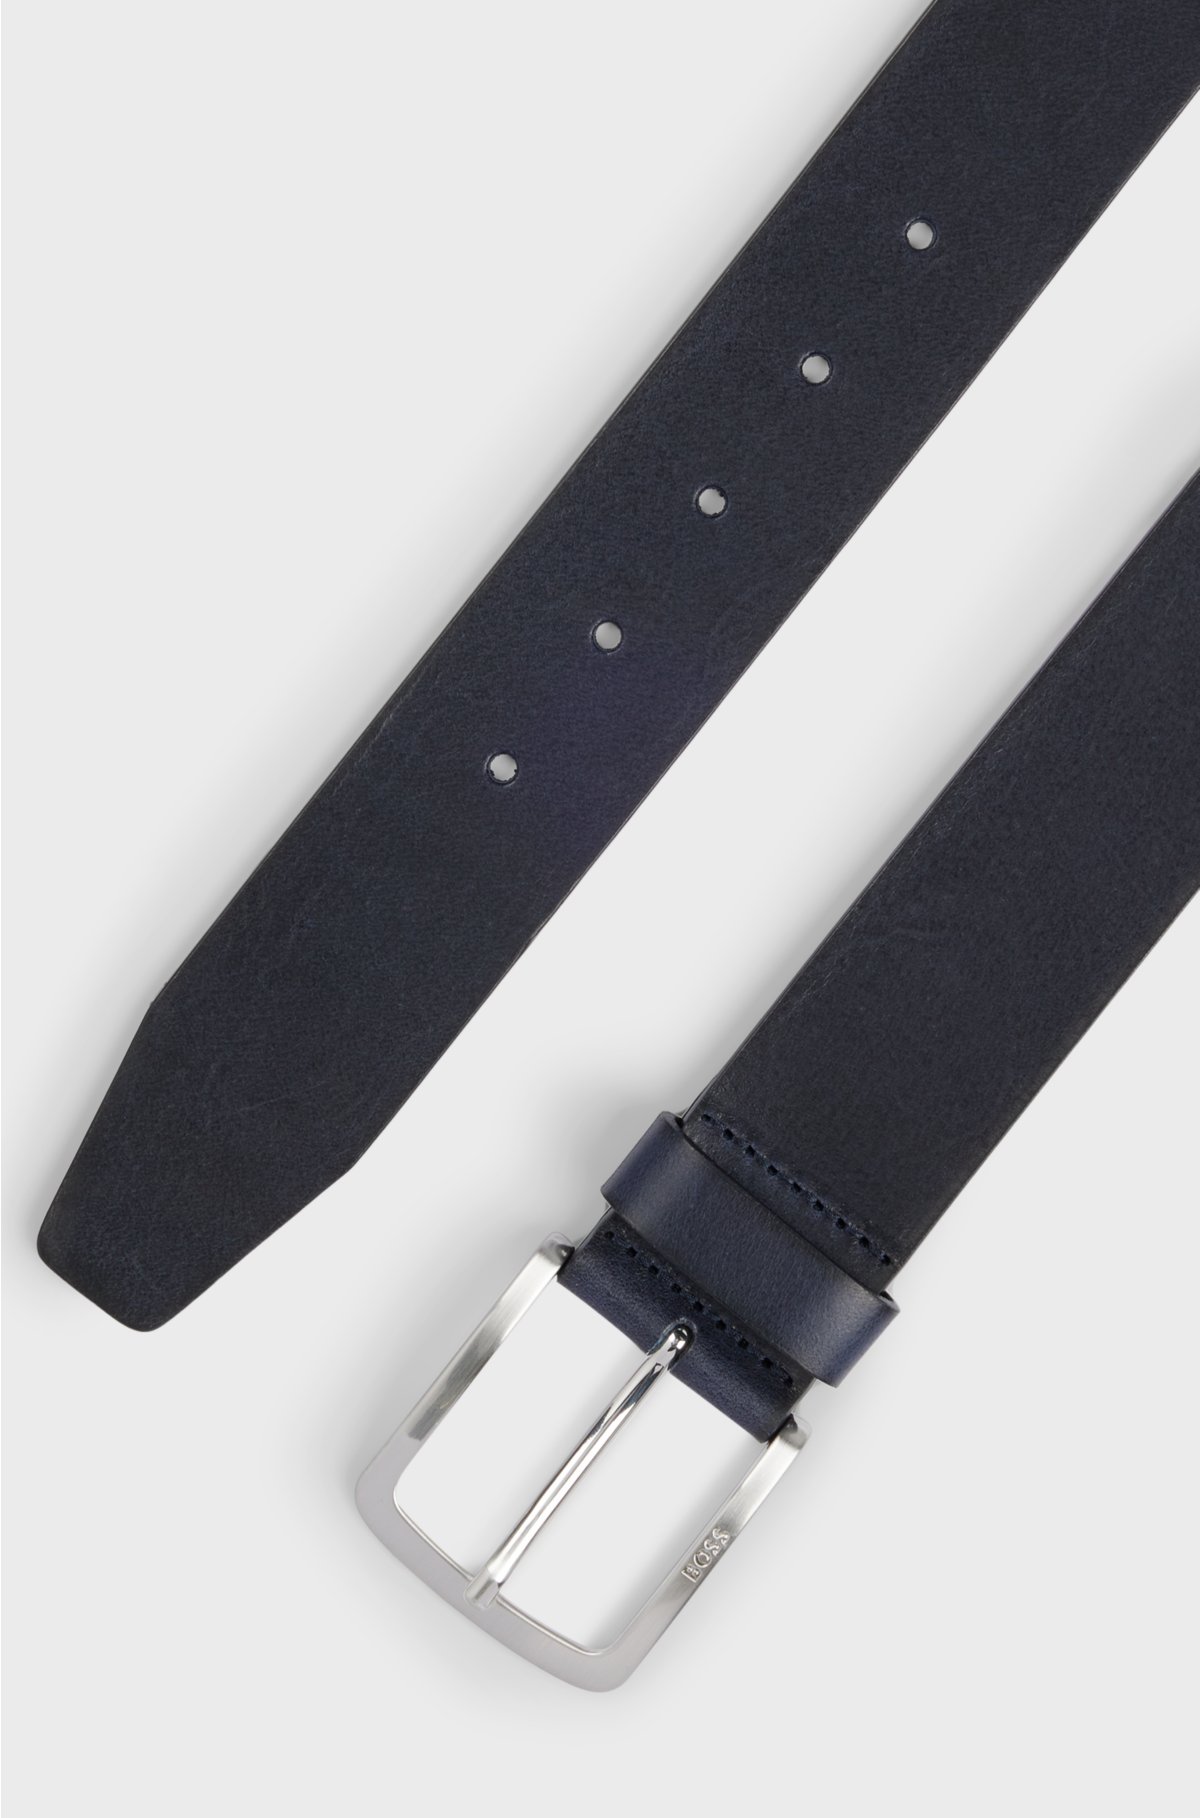 Italian-leather belt with logo-engraved buckle, Dark Blue